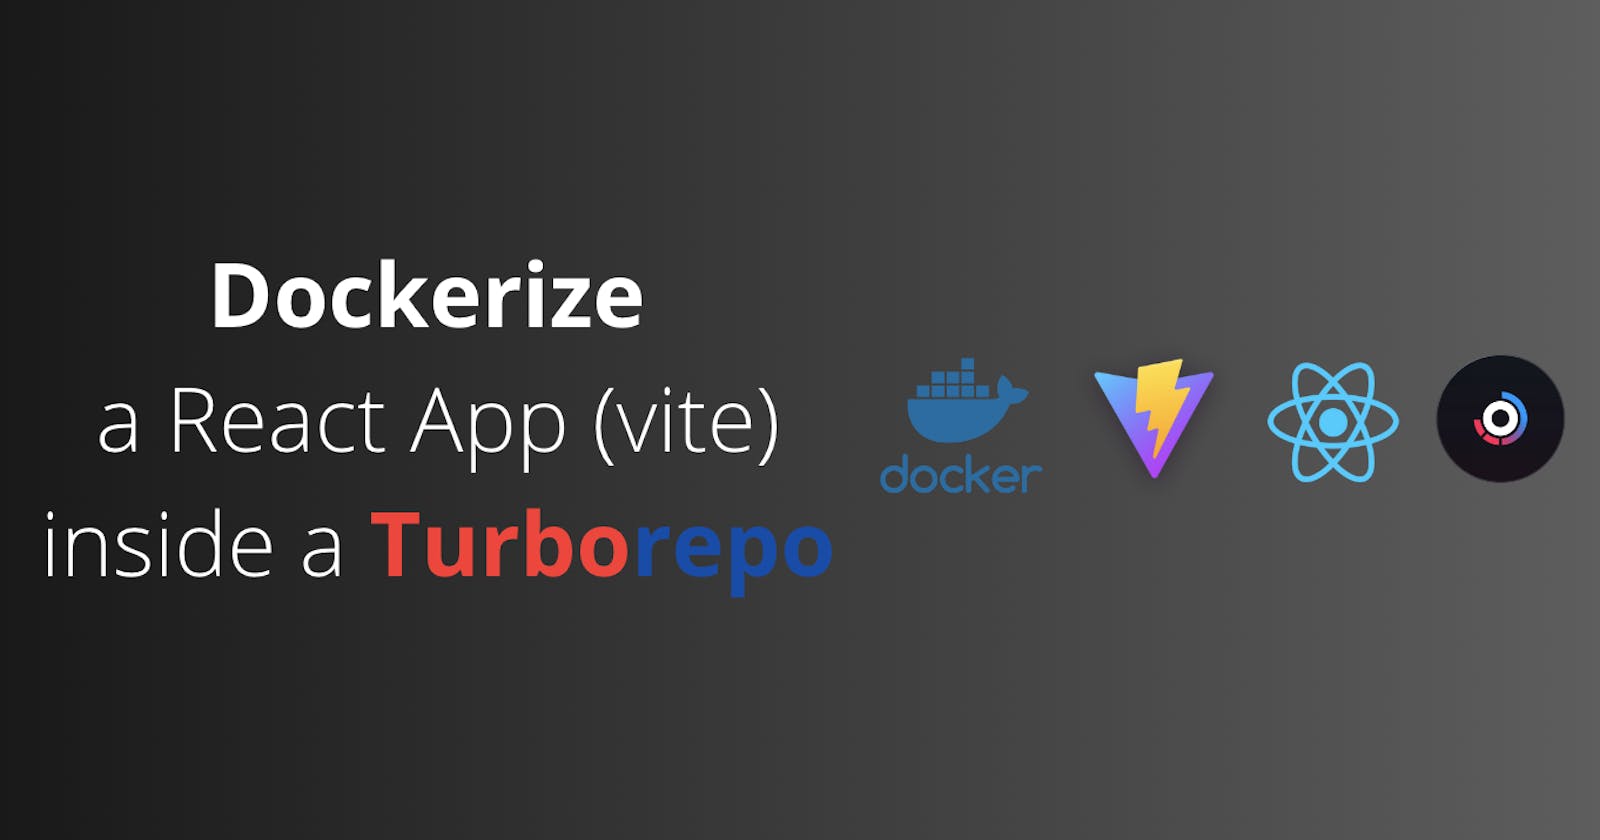 Dockerize a Rect App (vite) inside a Turborepo